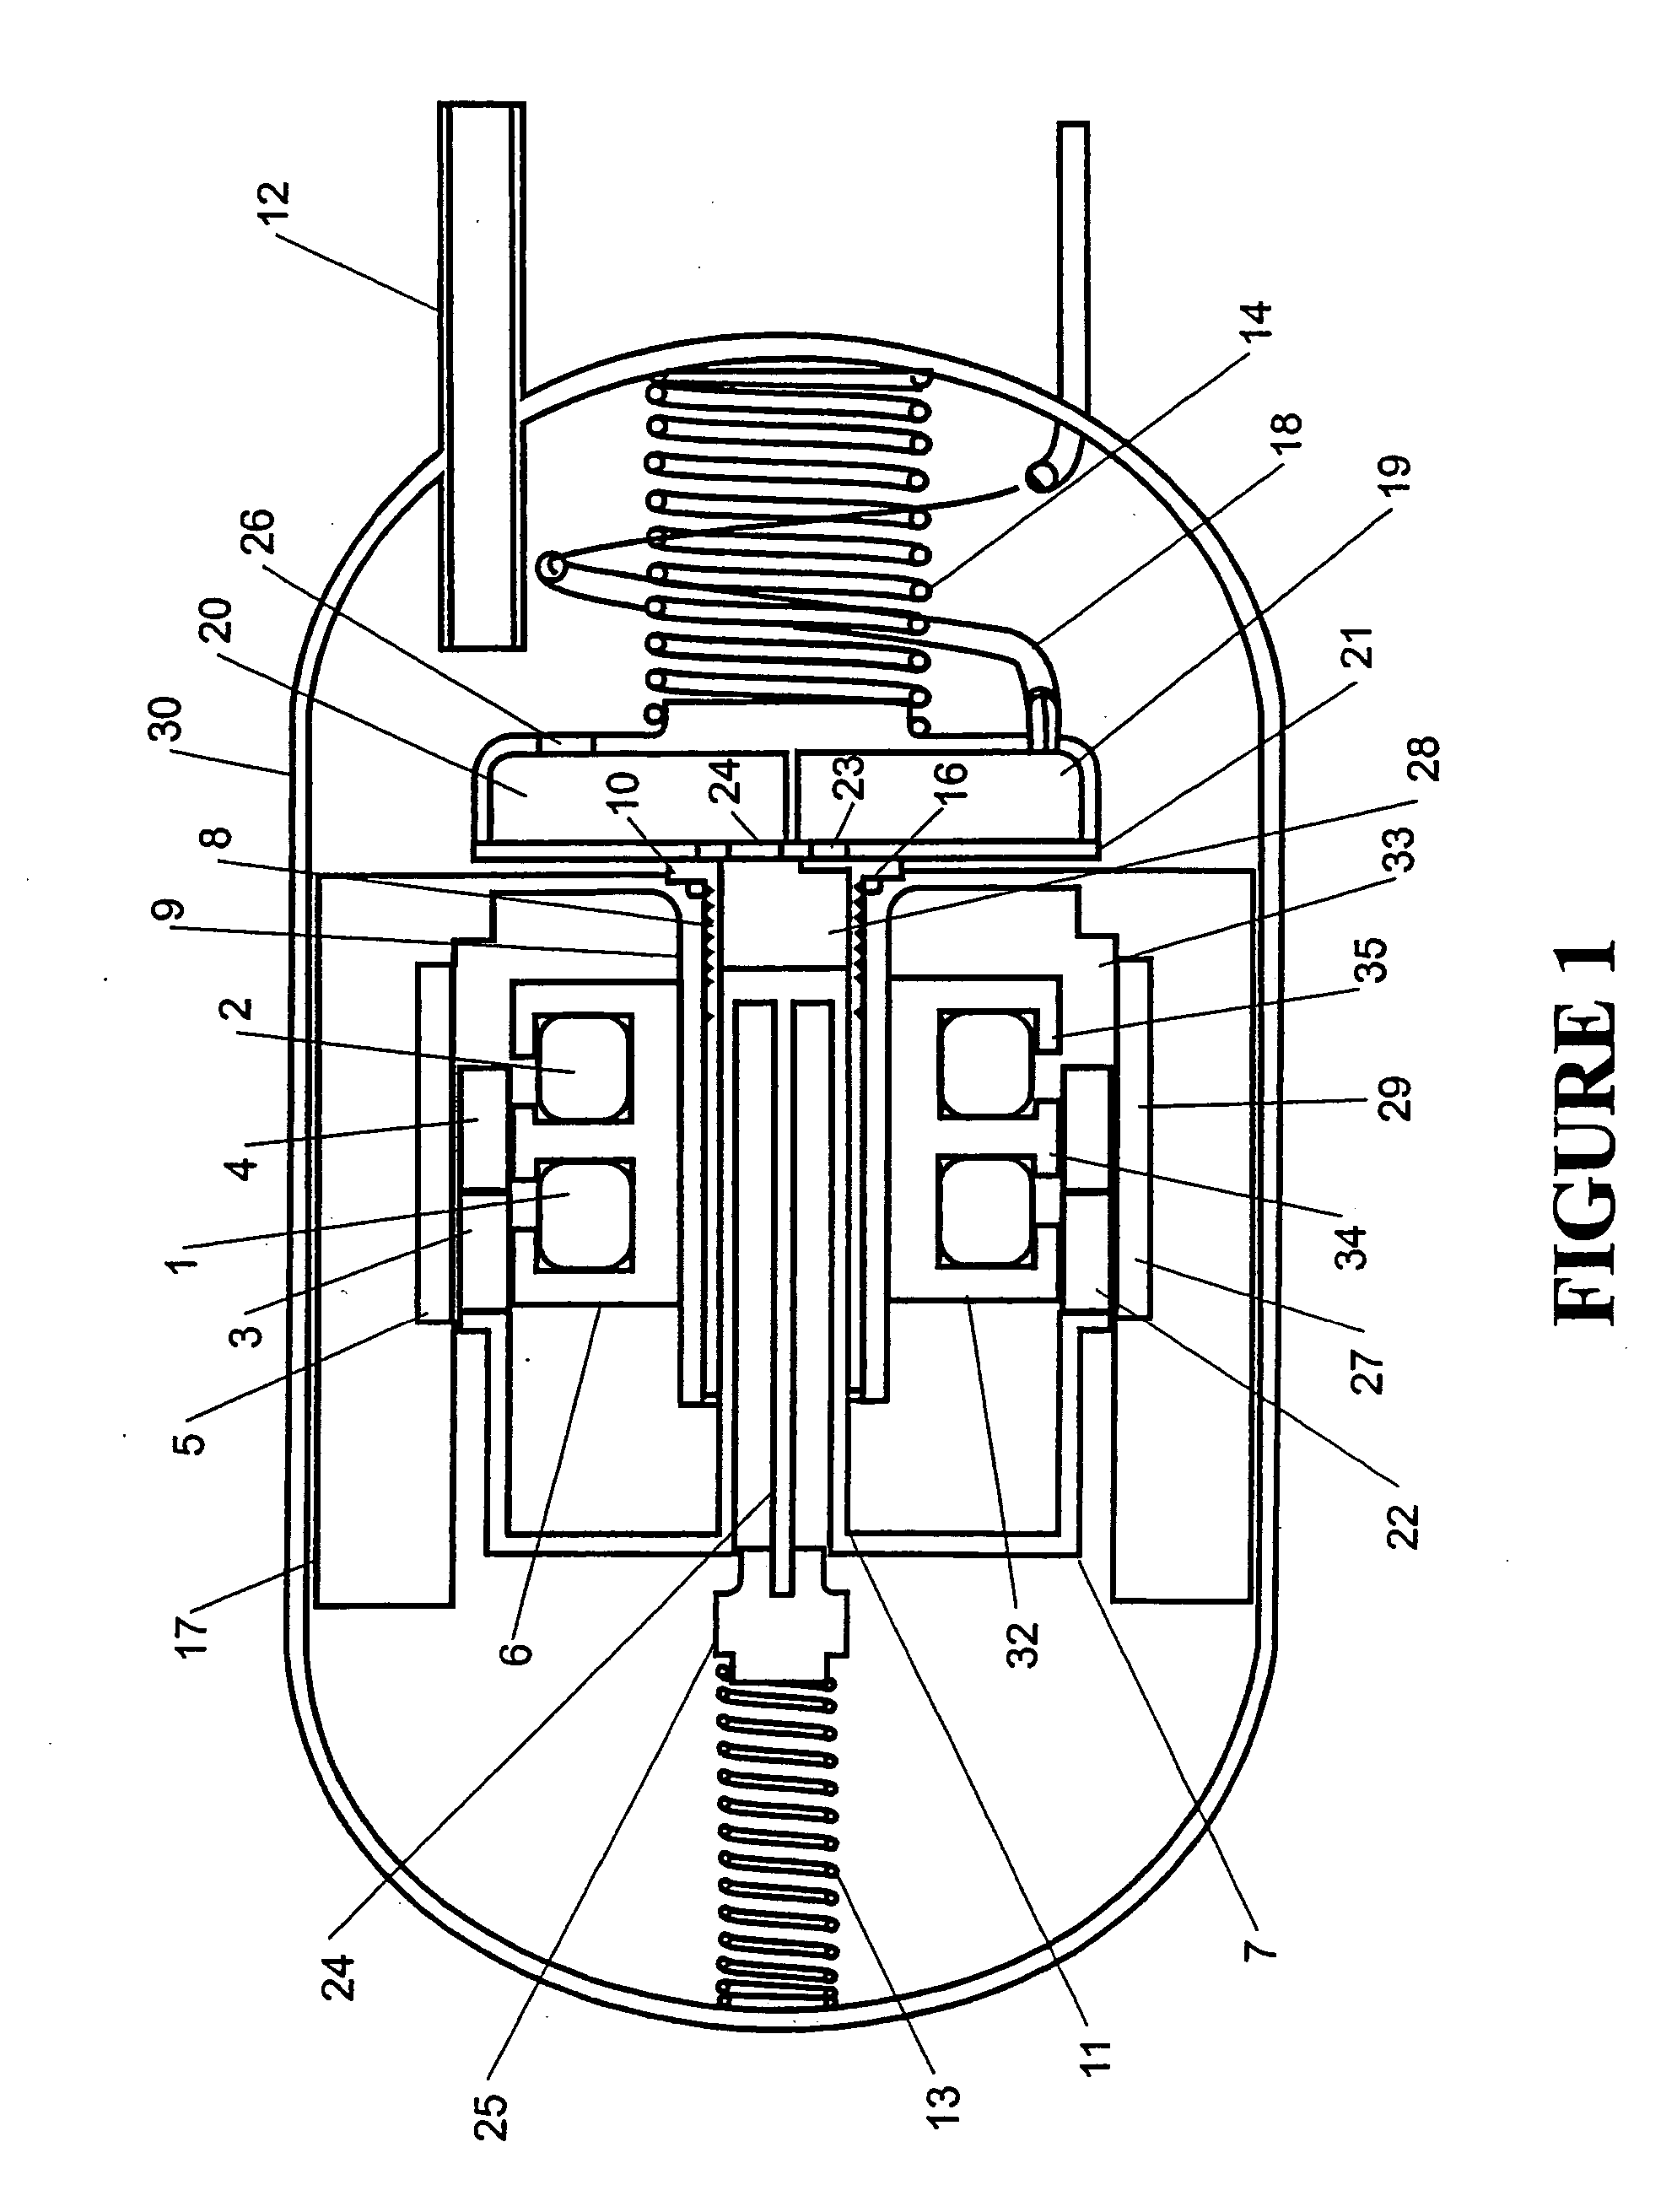 Linear motor controller